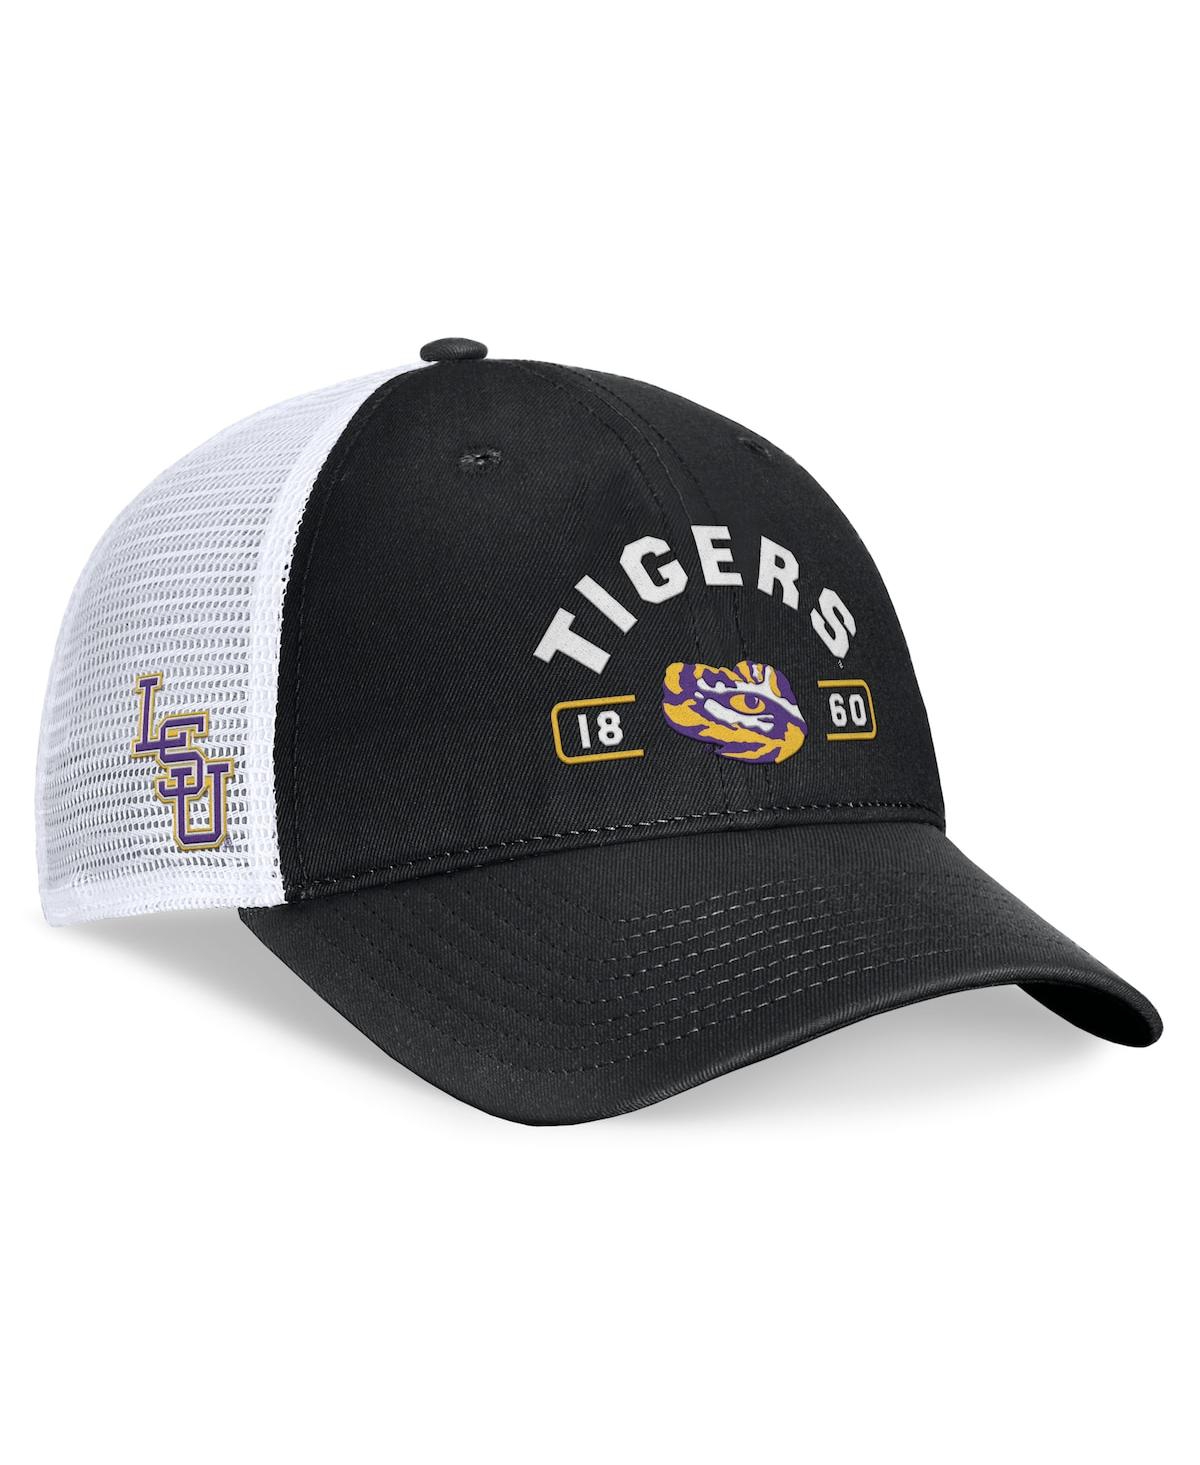 Men's / Lsu Tigers Free Kick Trucker Adjustable Hat - Black, White